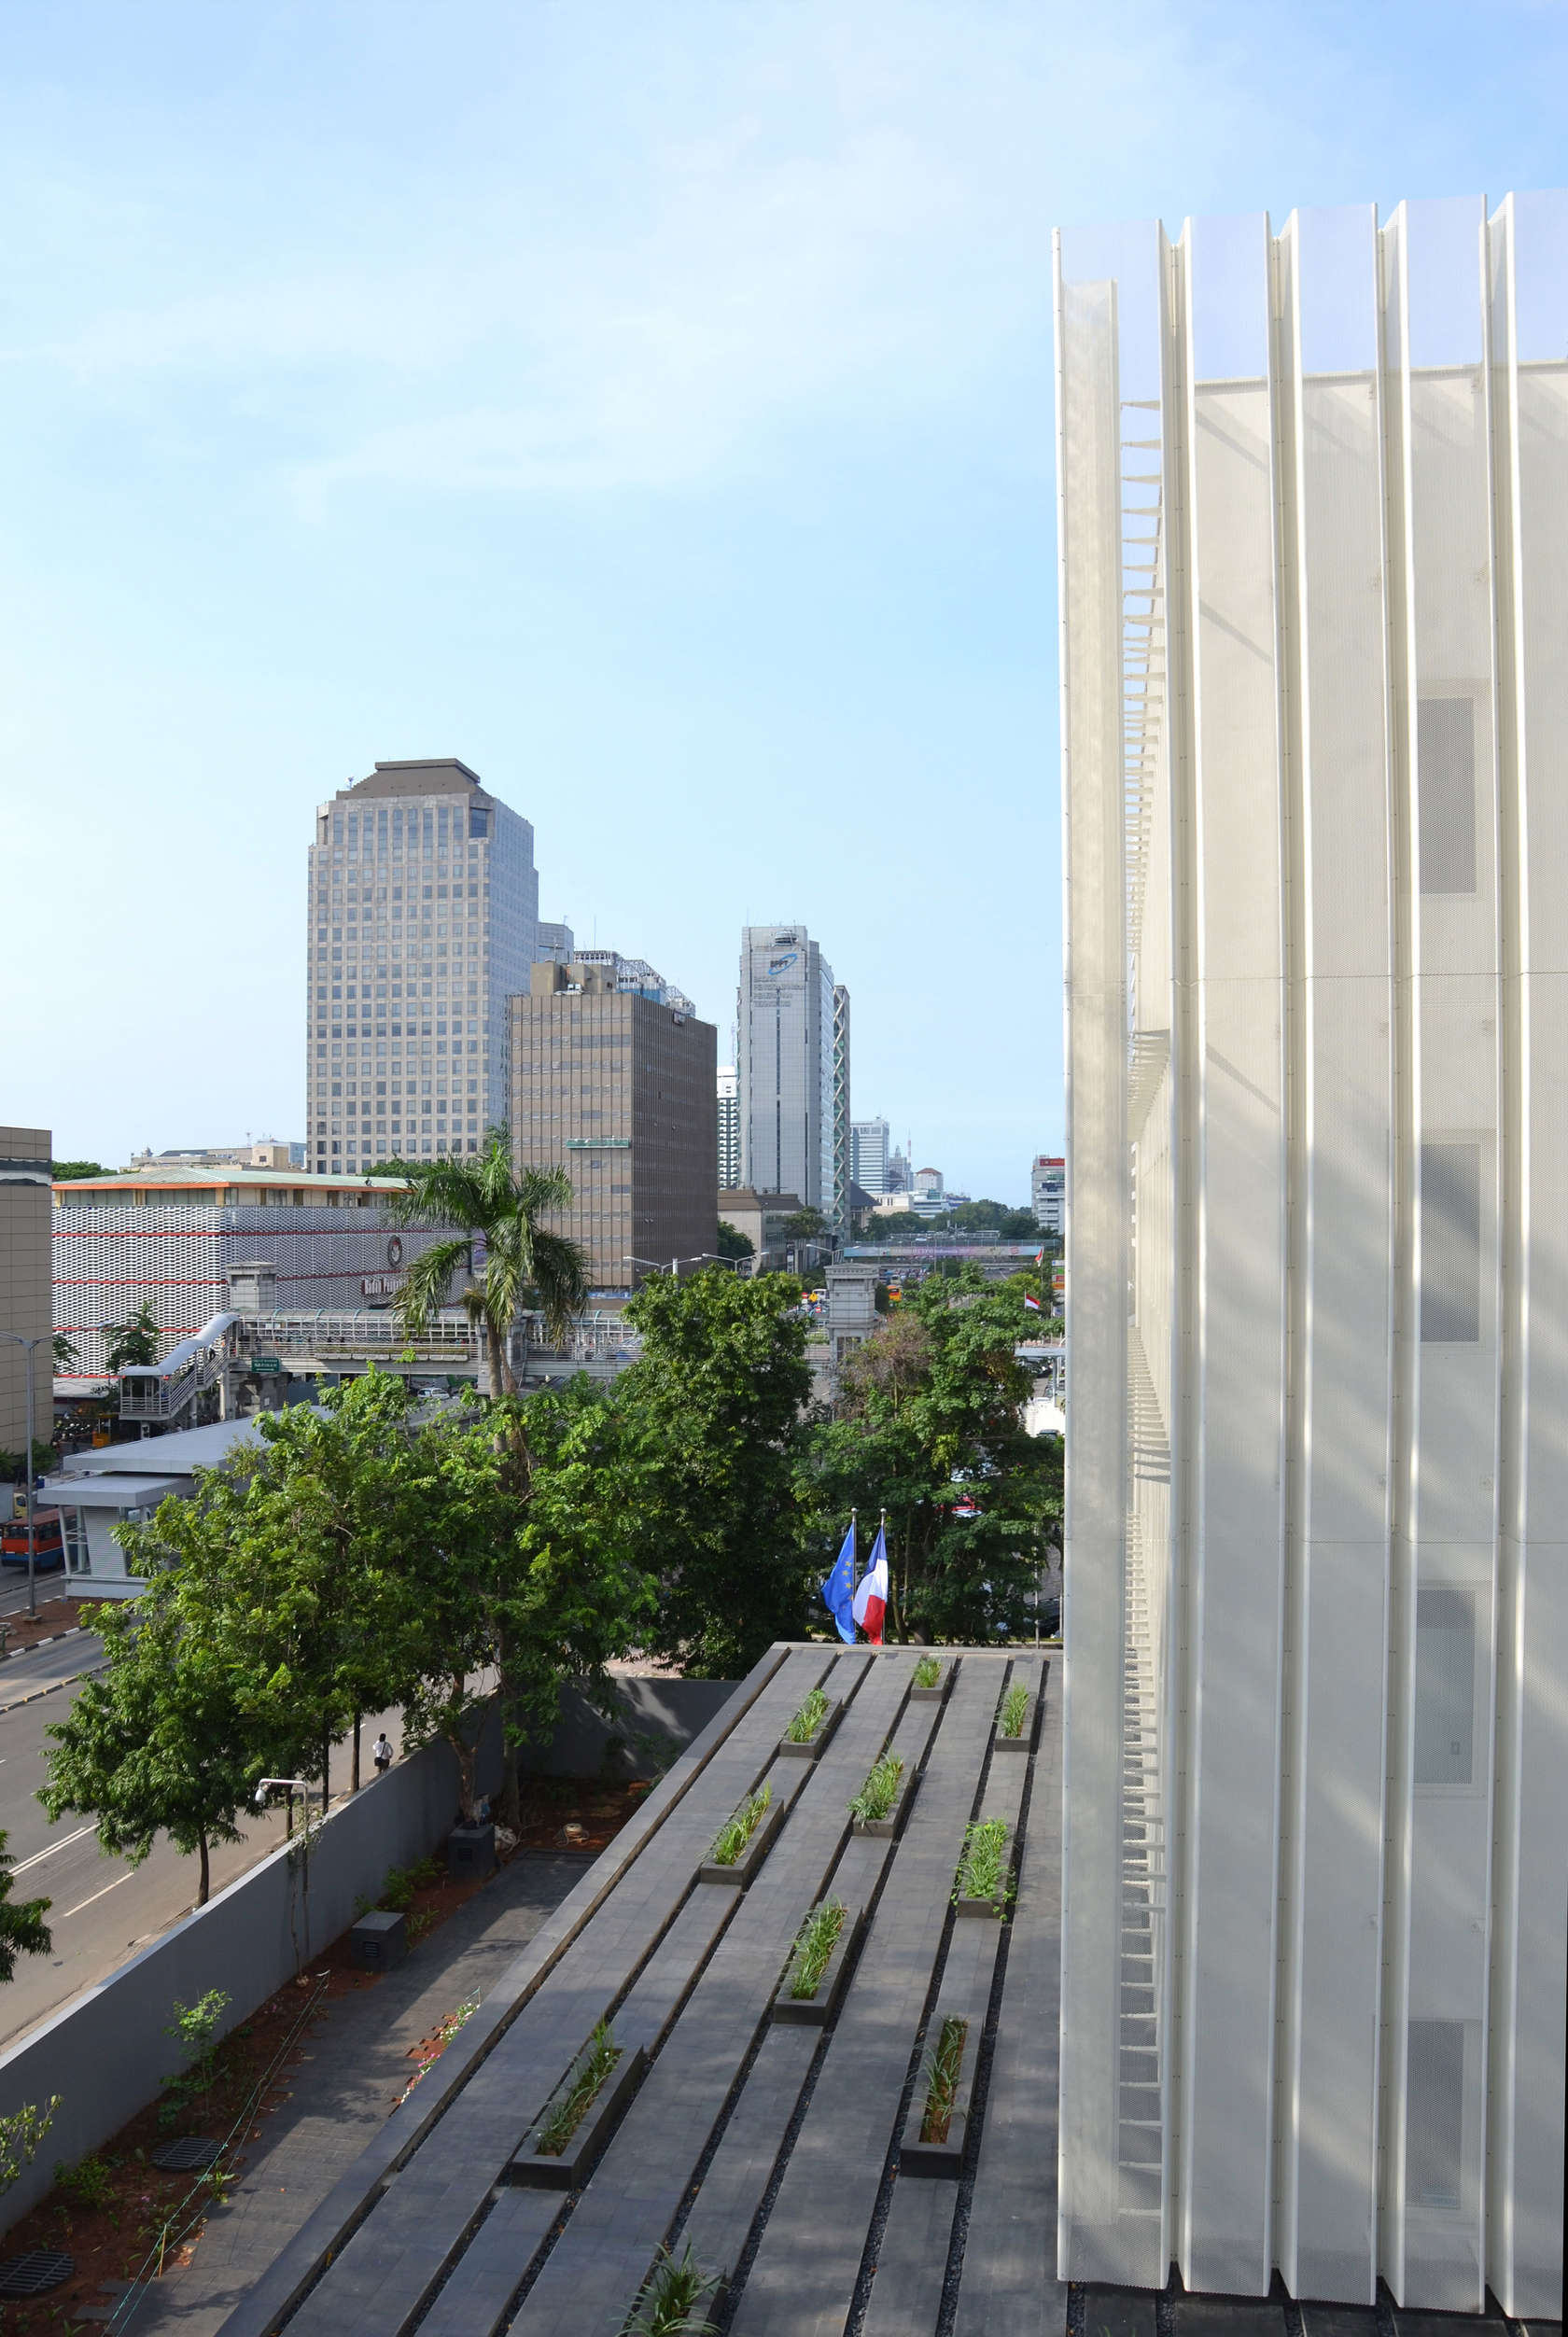 La moderna Embajada Francesa en Indonesia